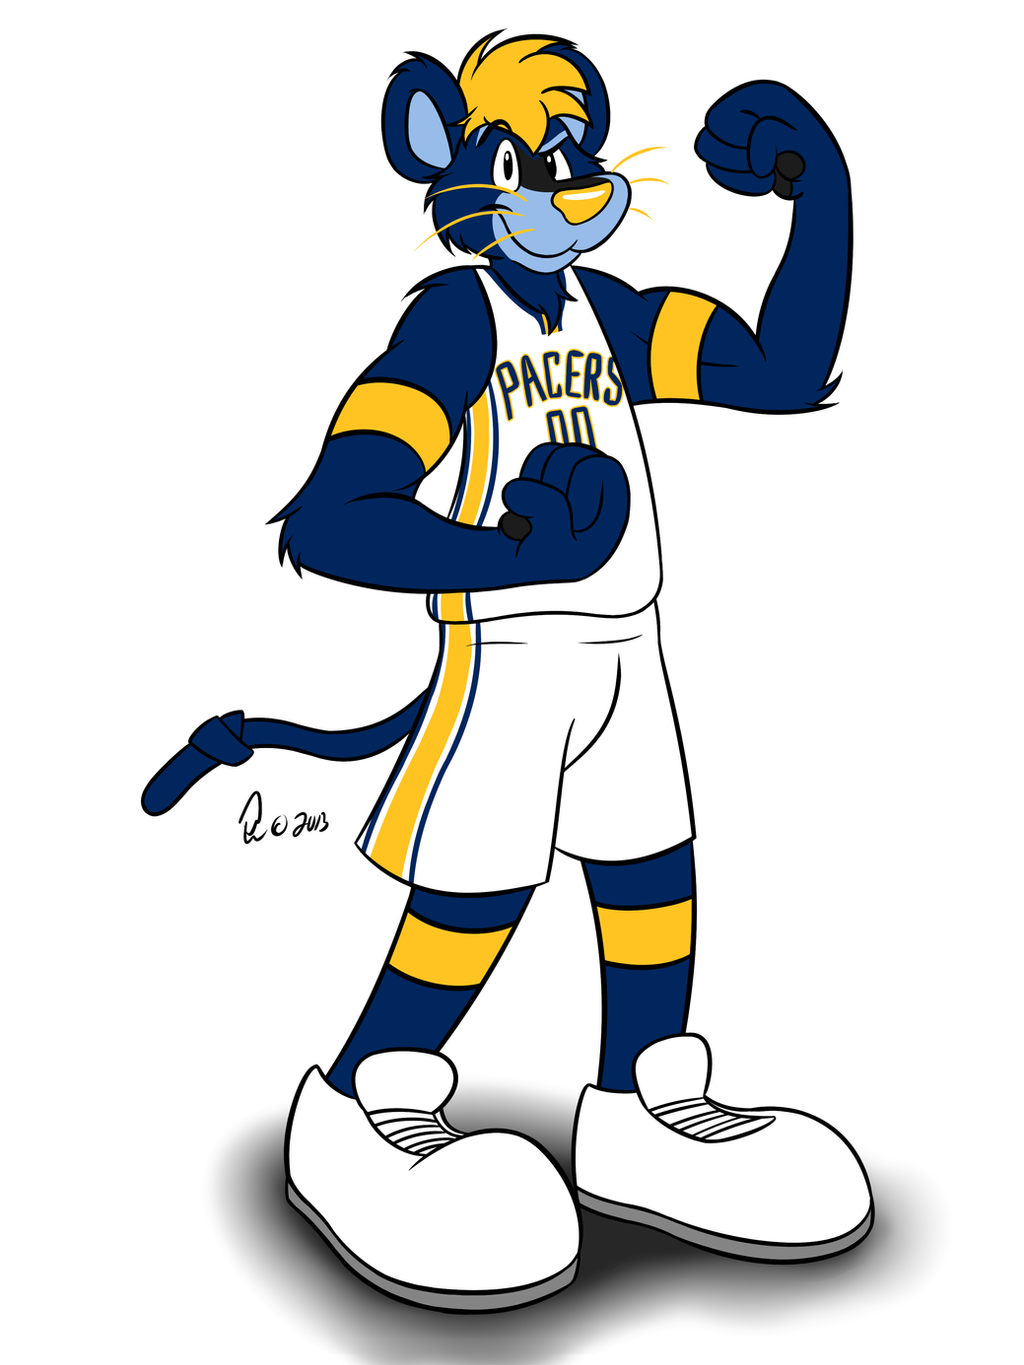 Lakers Mascot Drawing / Lakers Mascot Sports Mascots Pinterest